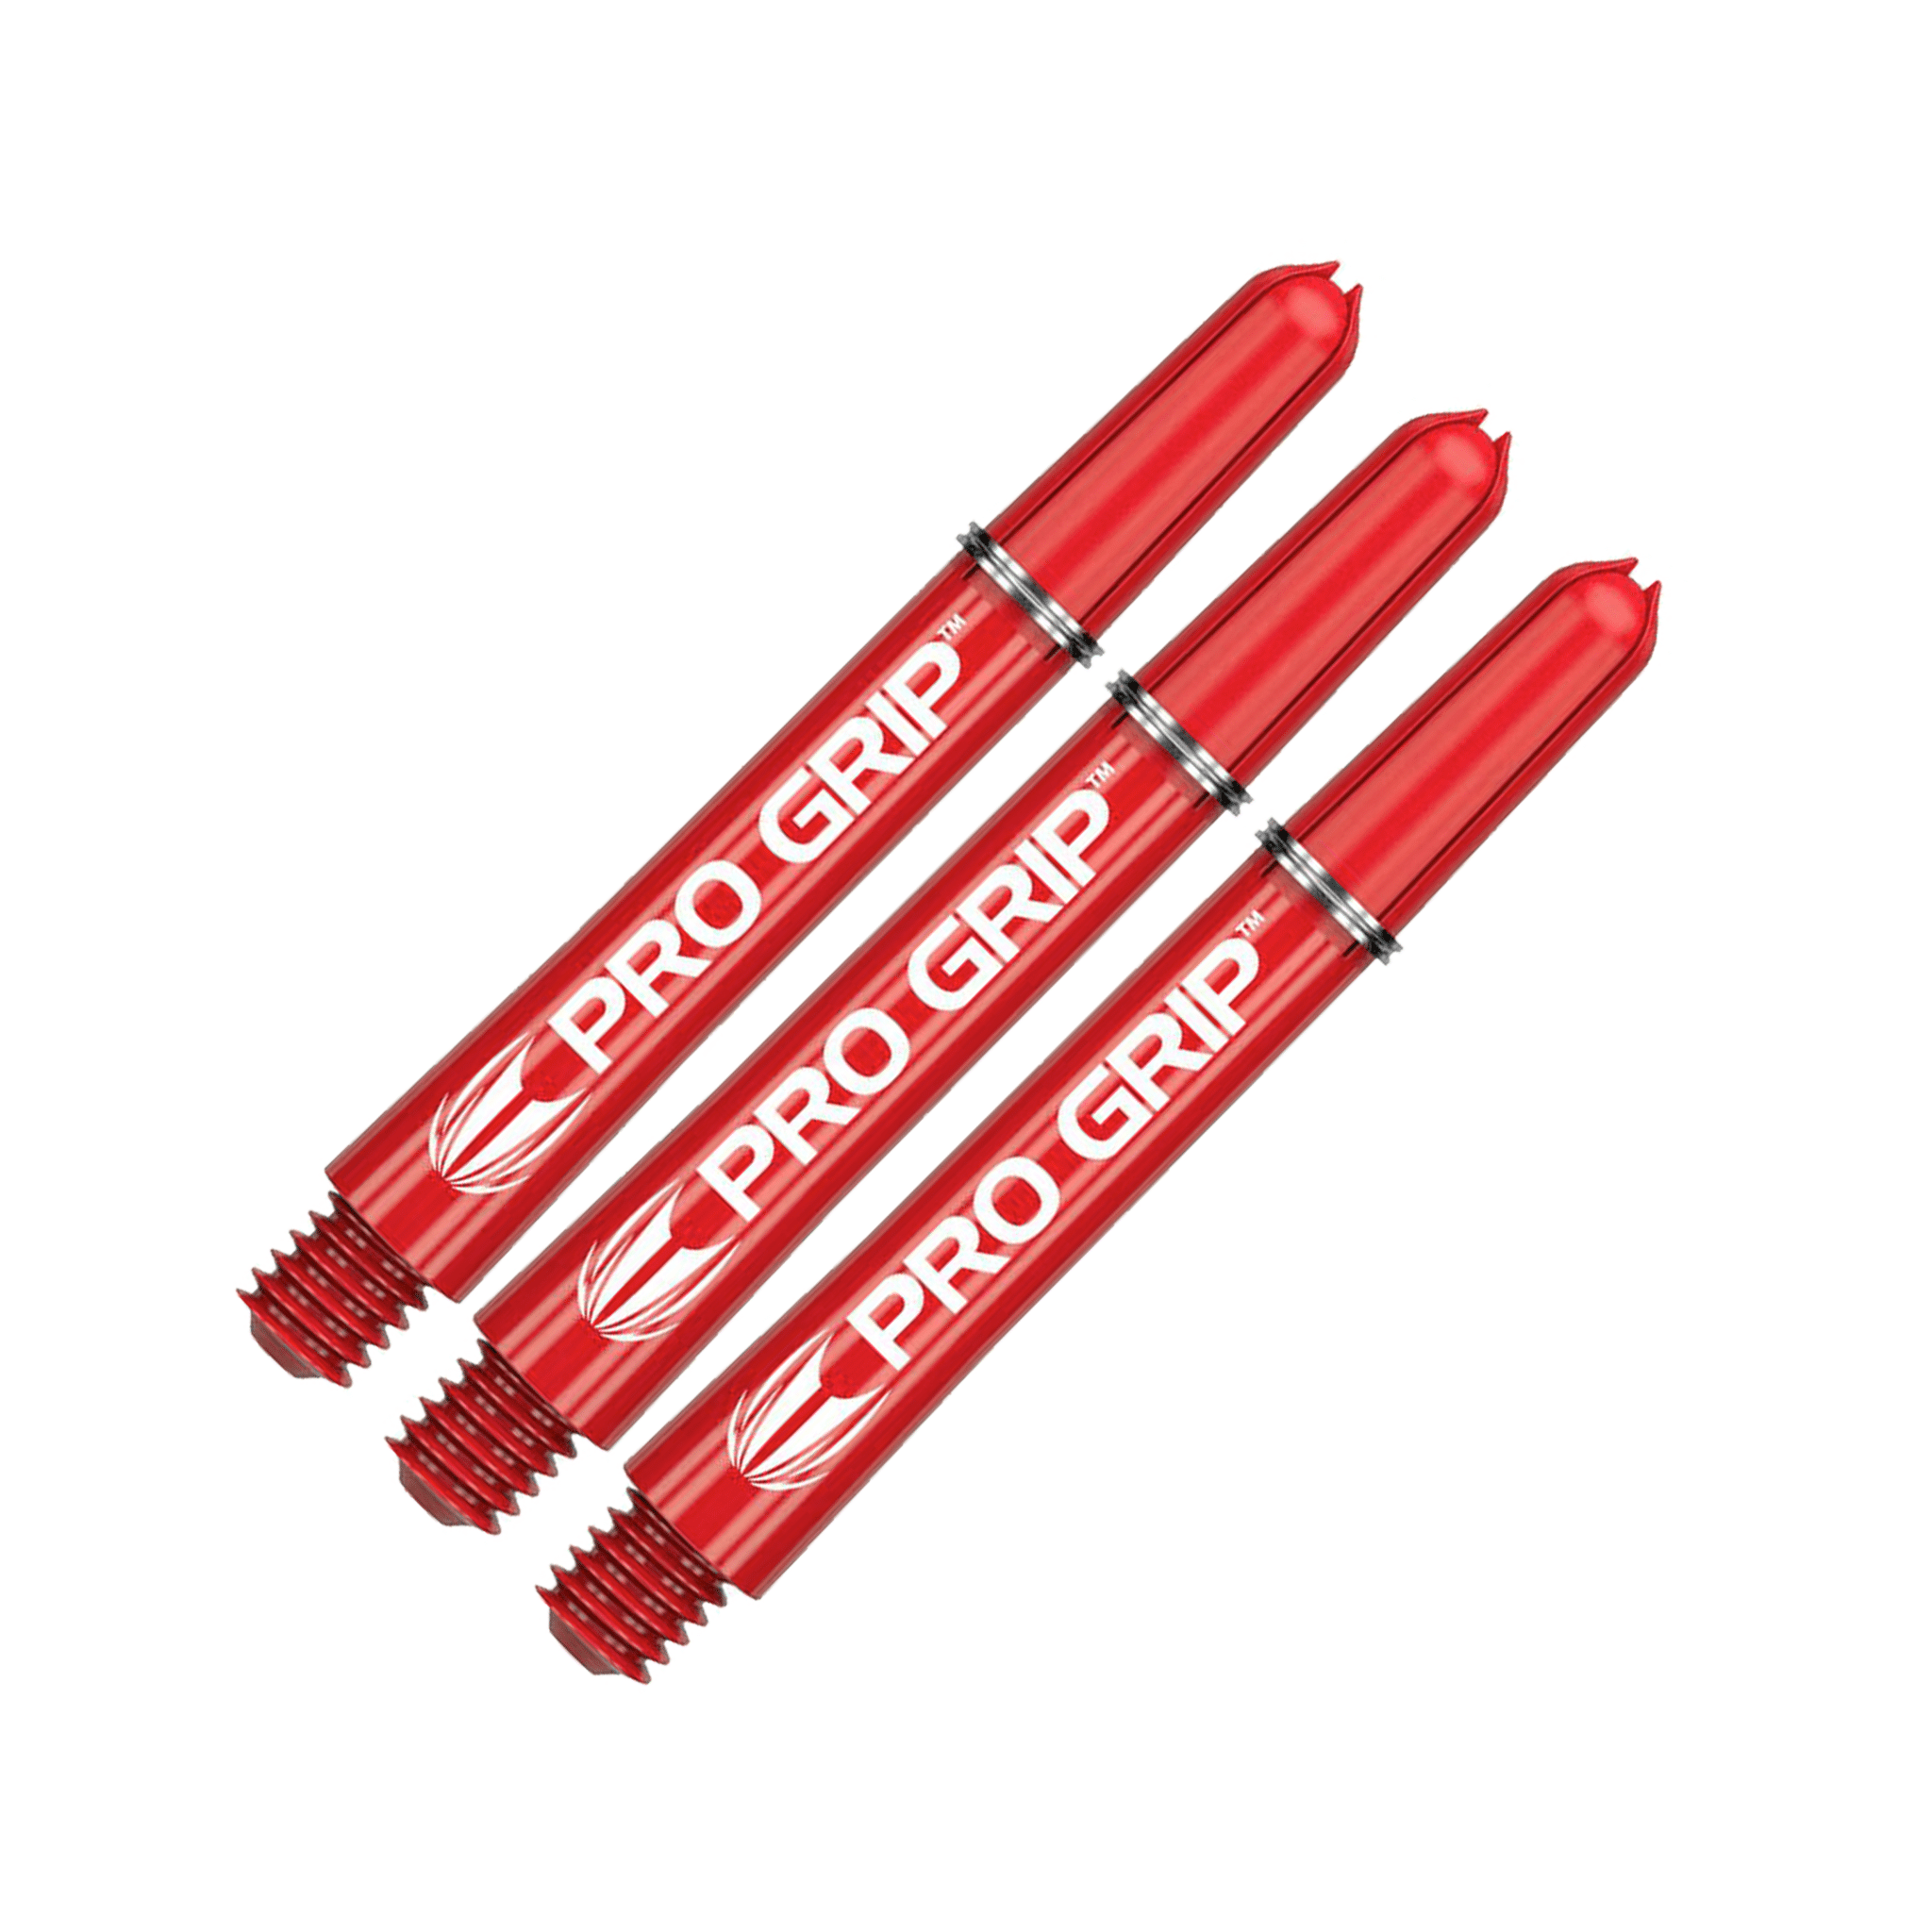 Target Pro Grip Multi Pack - Nylon Dart Shafts (3 Sets) Red / Intermediate (41mm) Shafts